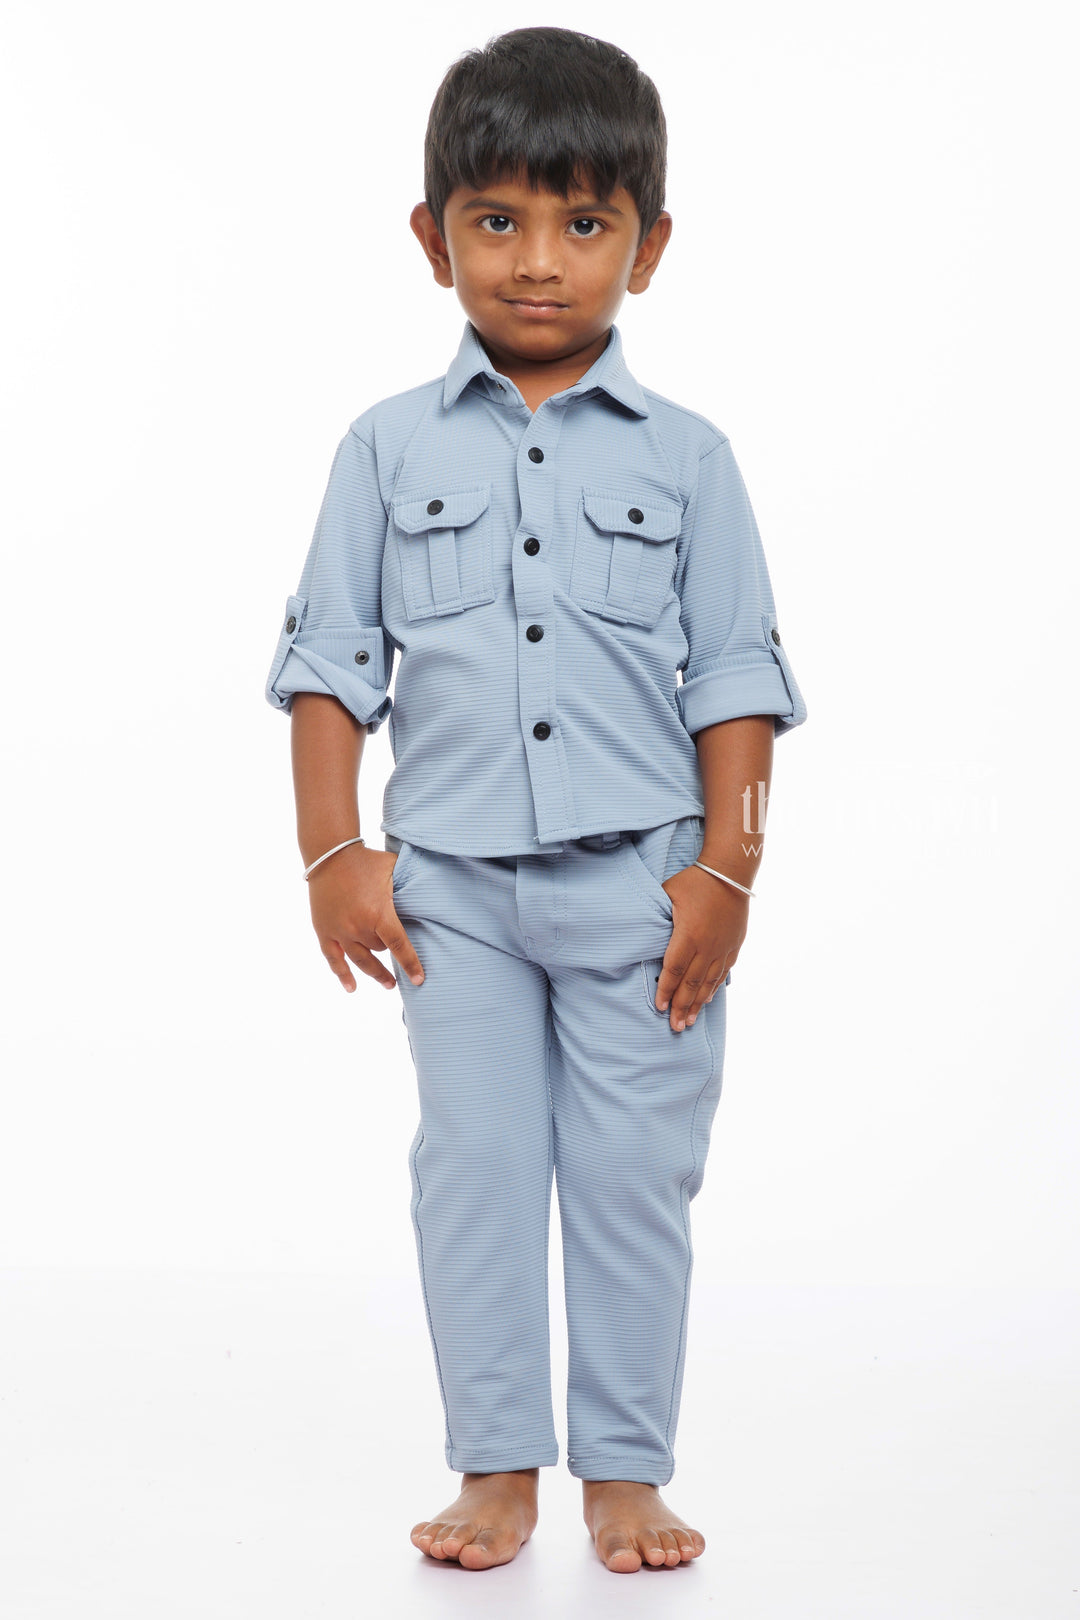 The Nesavu Boys Casual Set Boys Sleek Grey Shirt and Pant Set - Trendy Comfort Nesavu 14 (6M) / Gray / Knitted Lycra BES528A-14 Cool Grey Boys Casual Shirt  Pant Set | Versatile Style for Every Occasion | The Nesavu